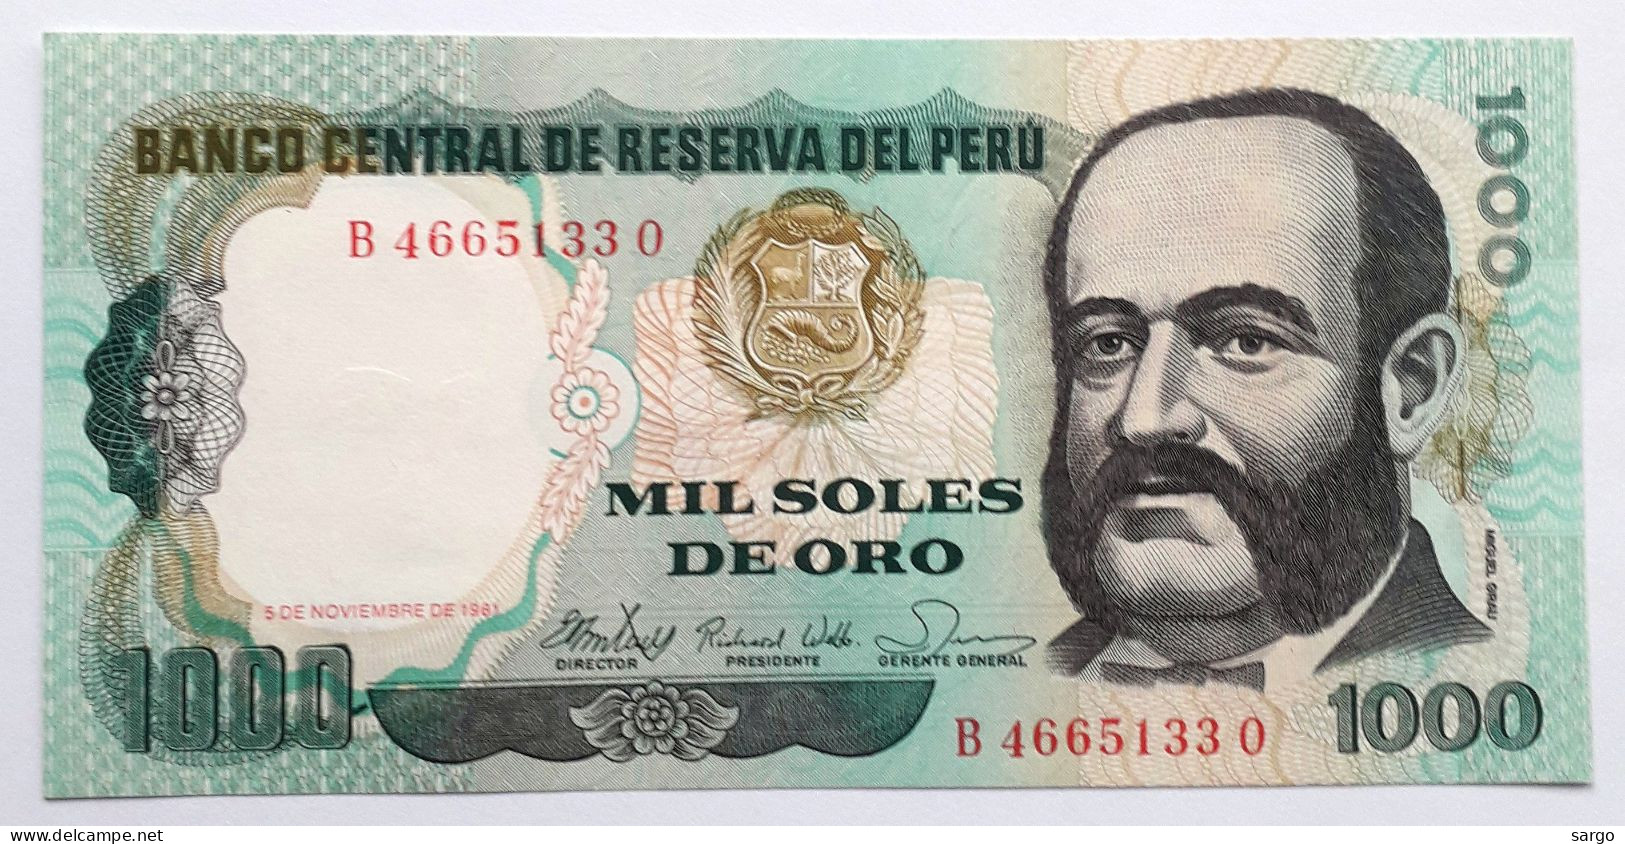 PERU' - 1.000 SOLES DE ORO  - P 122  (1981) - UNC - BANKNOTES - PAPER MONEY - CARTAMONETA - - Perù